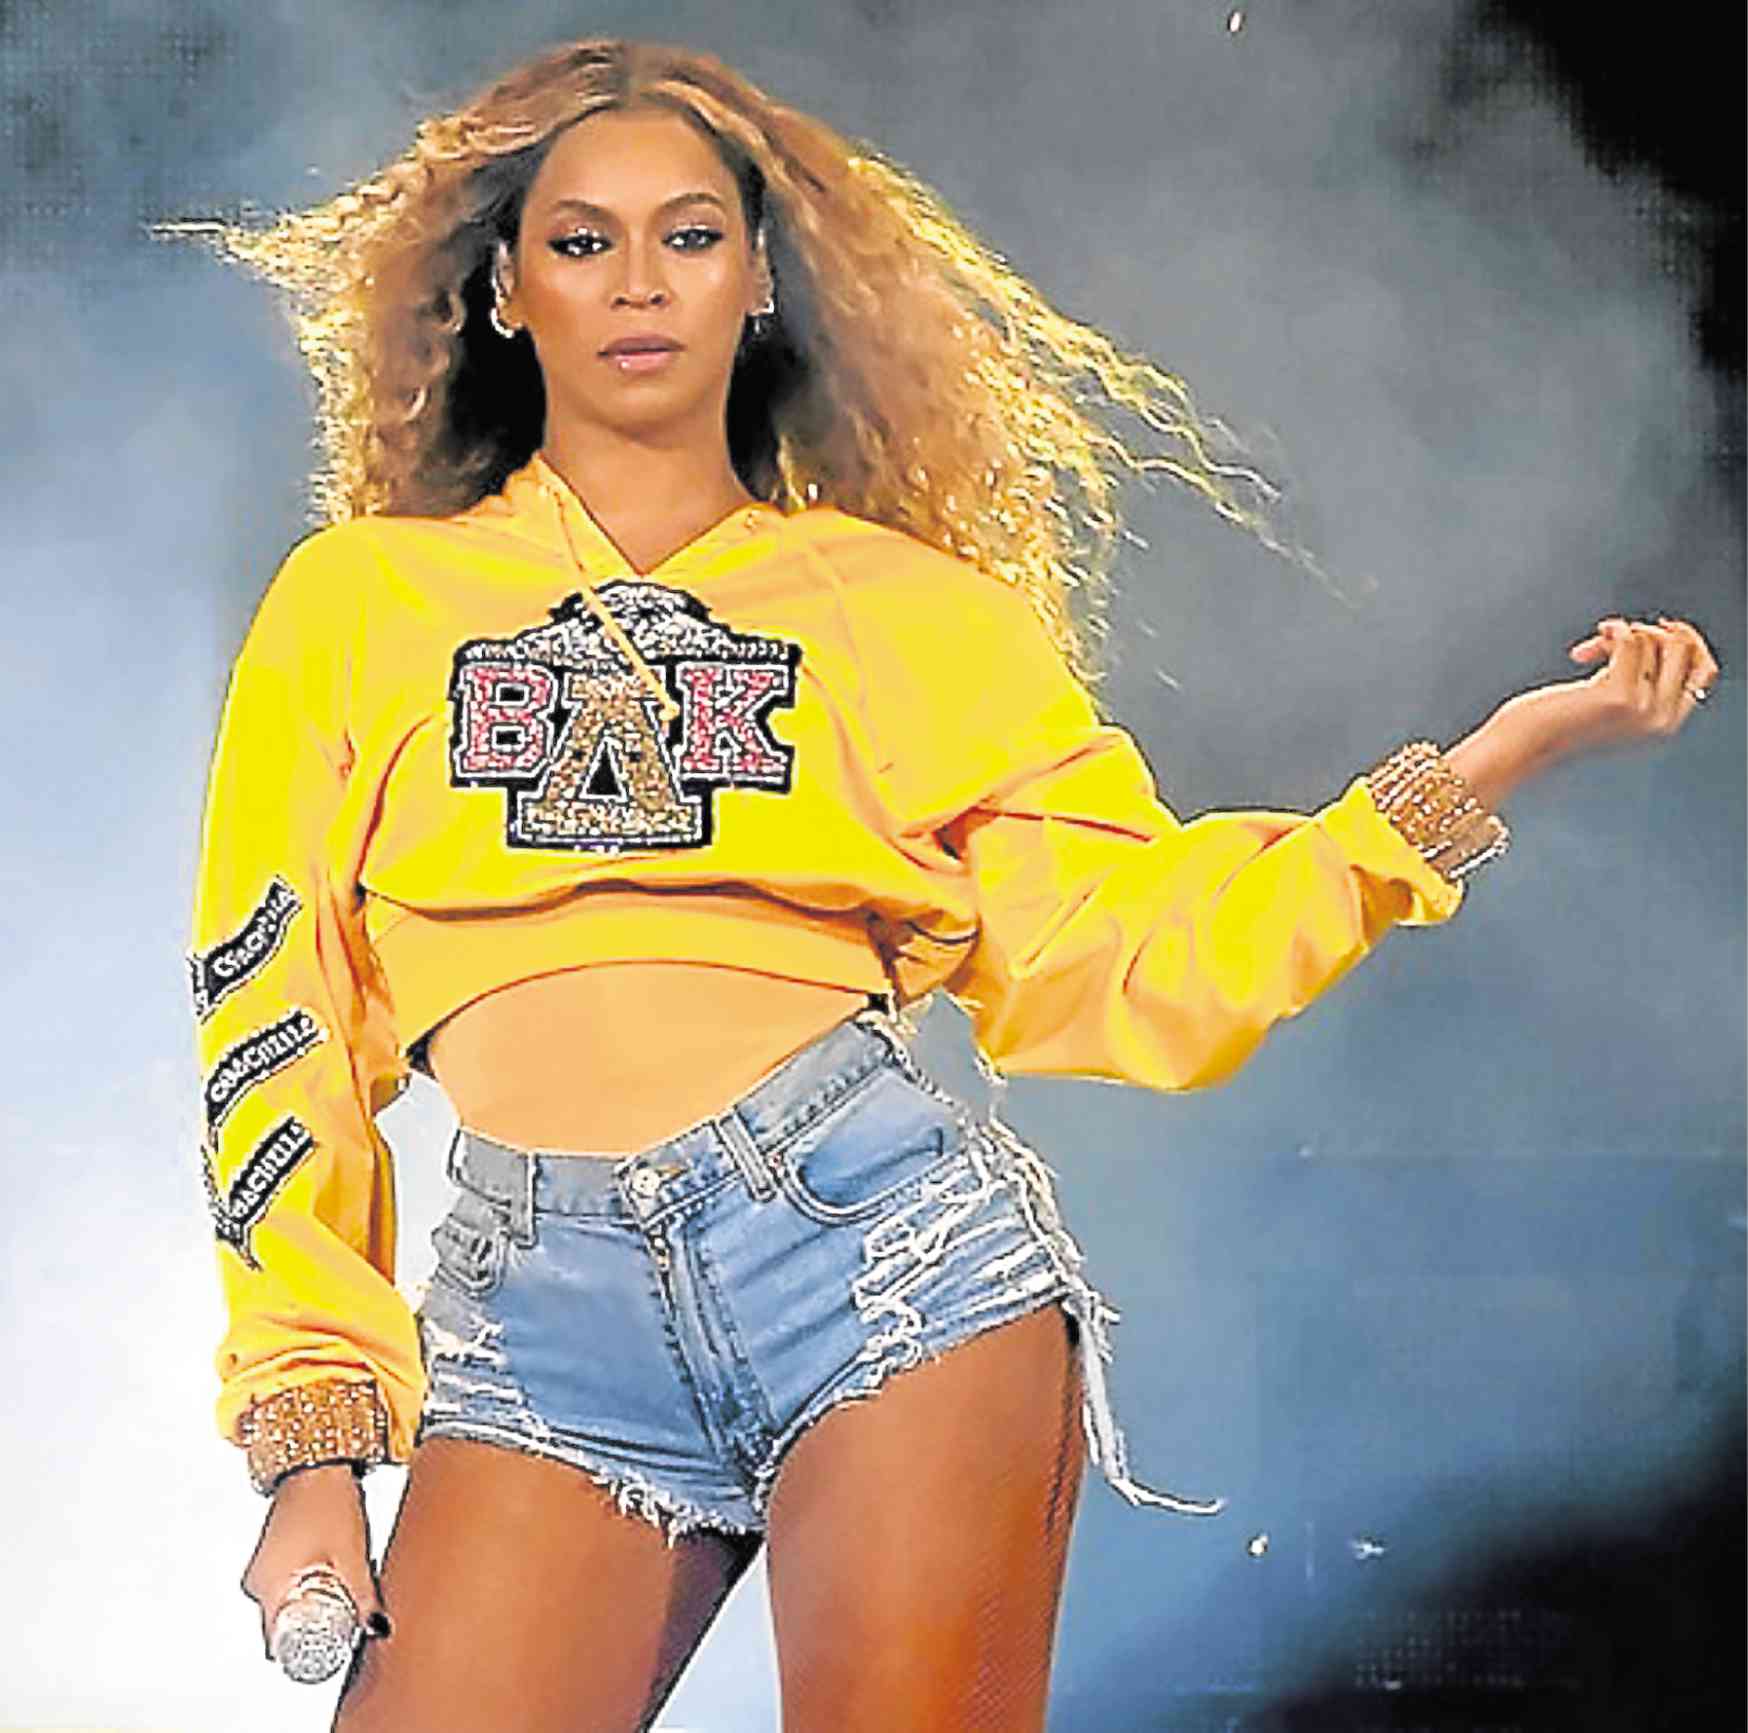 Beyoncé drops another surprise album: ‘Homecoming’